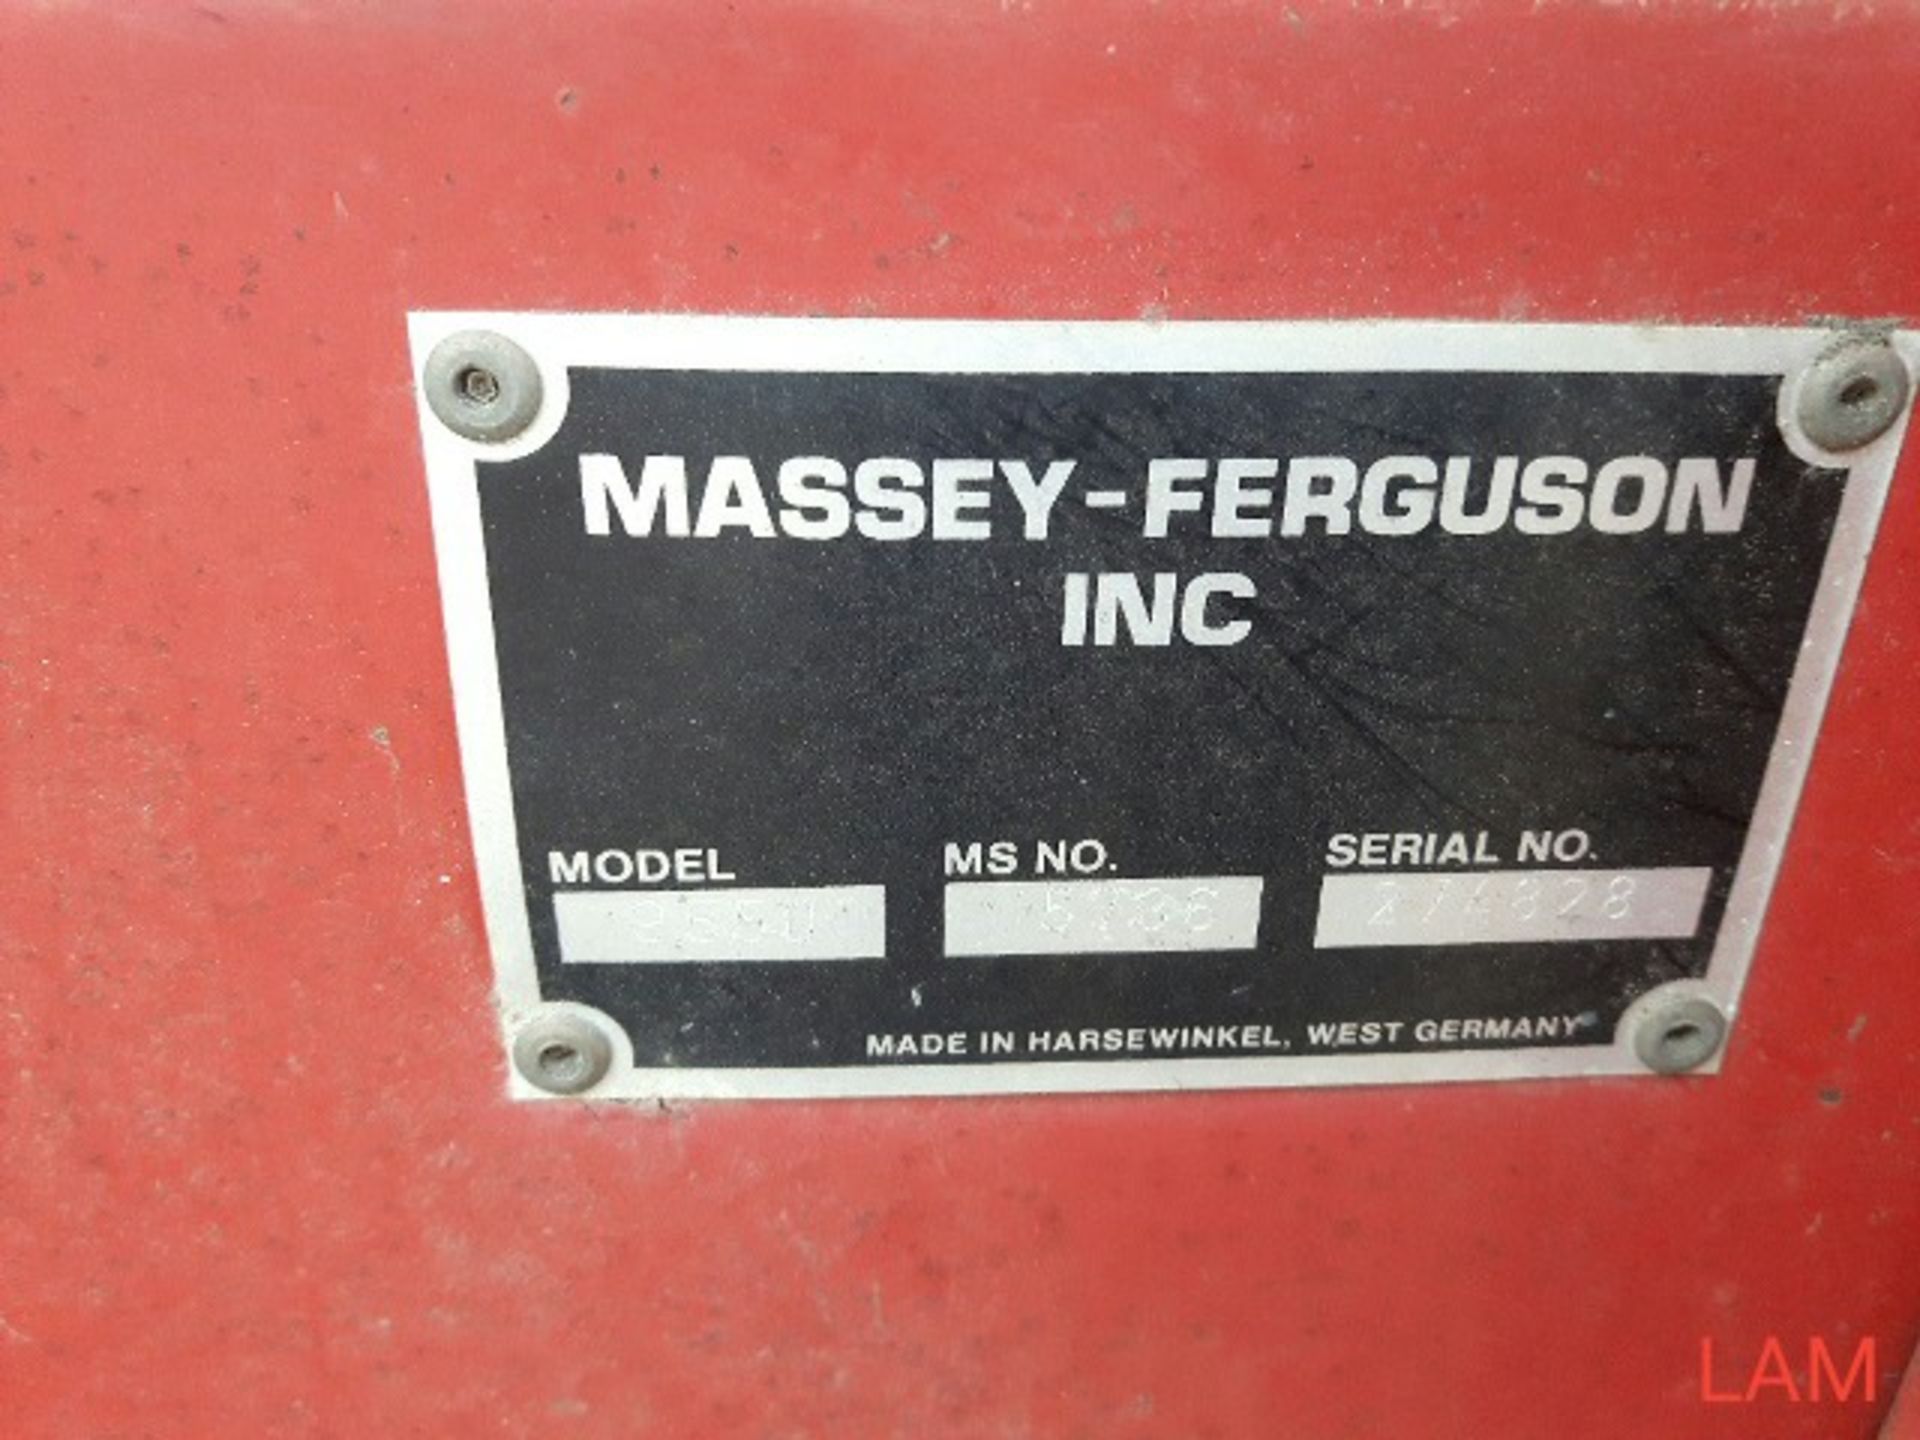 25 FT Massey Ferguson Straight Cut Header w/Pickup Reel, to fit 8460 Massey Ferguson Combine - Image 4 of 10